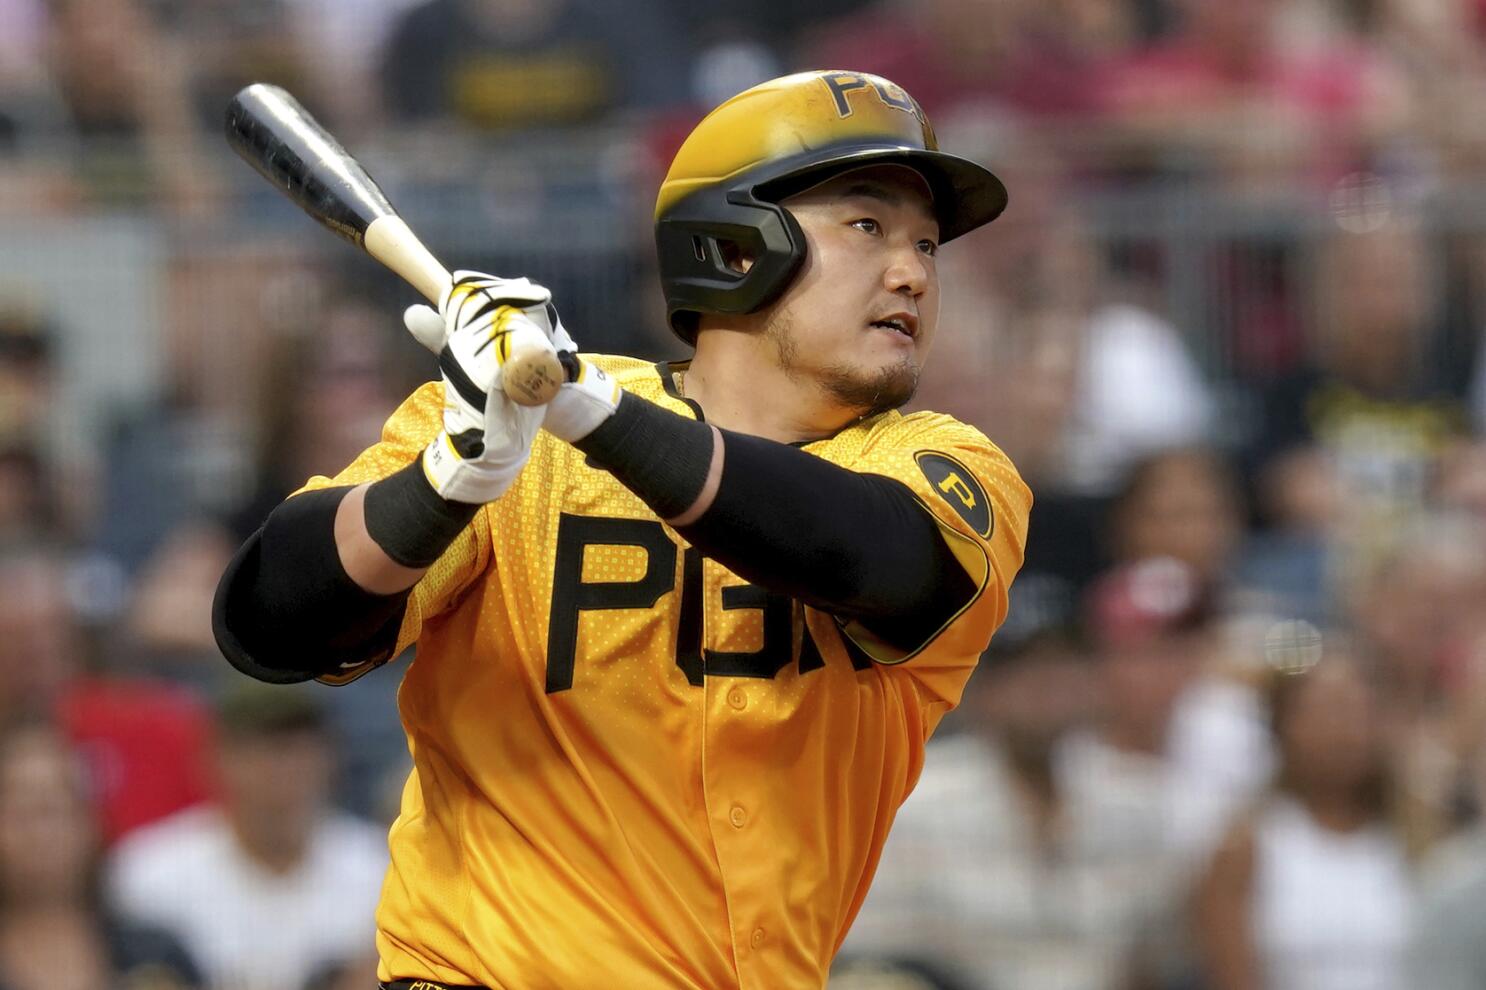 Ji Man Choi - MLB First base - News, Stats, Bio and more - The